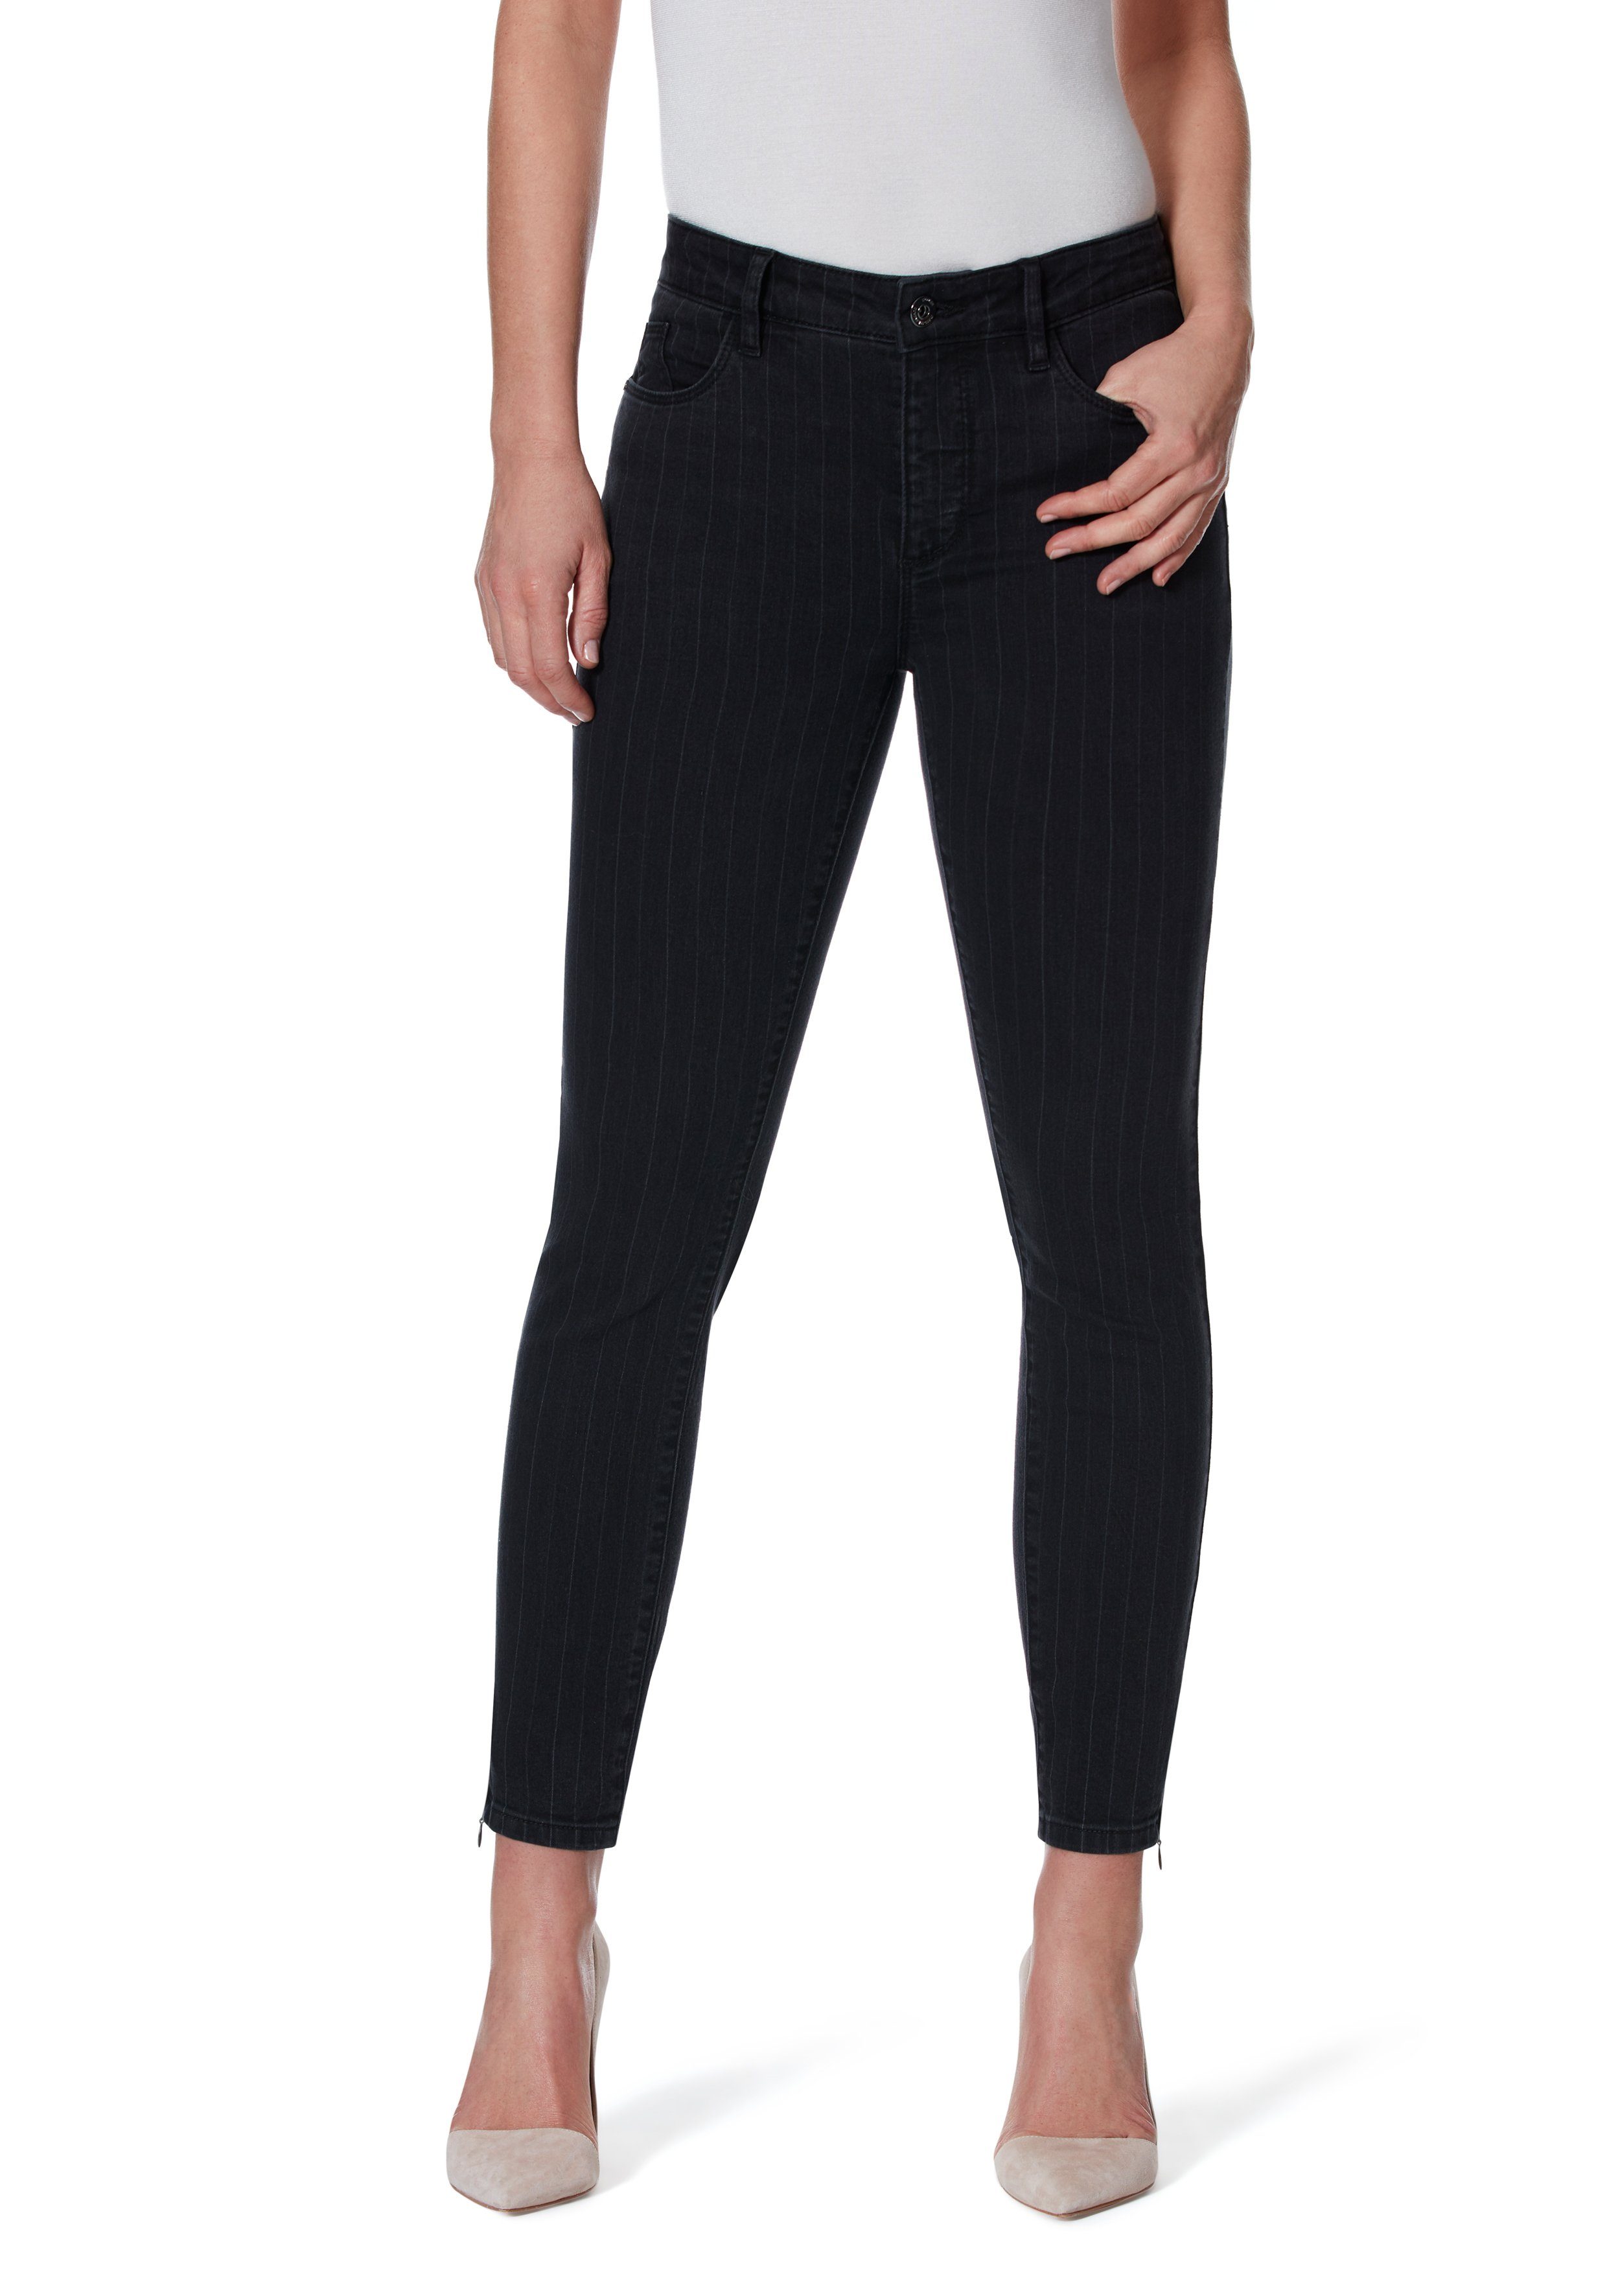 STOOKER WOMEN Style Florenz Black Denim Hose - Jeans Stretch Slim Slim-fit-Jeans Damen - Strip Fit